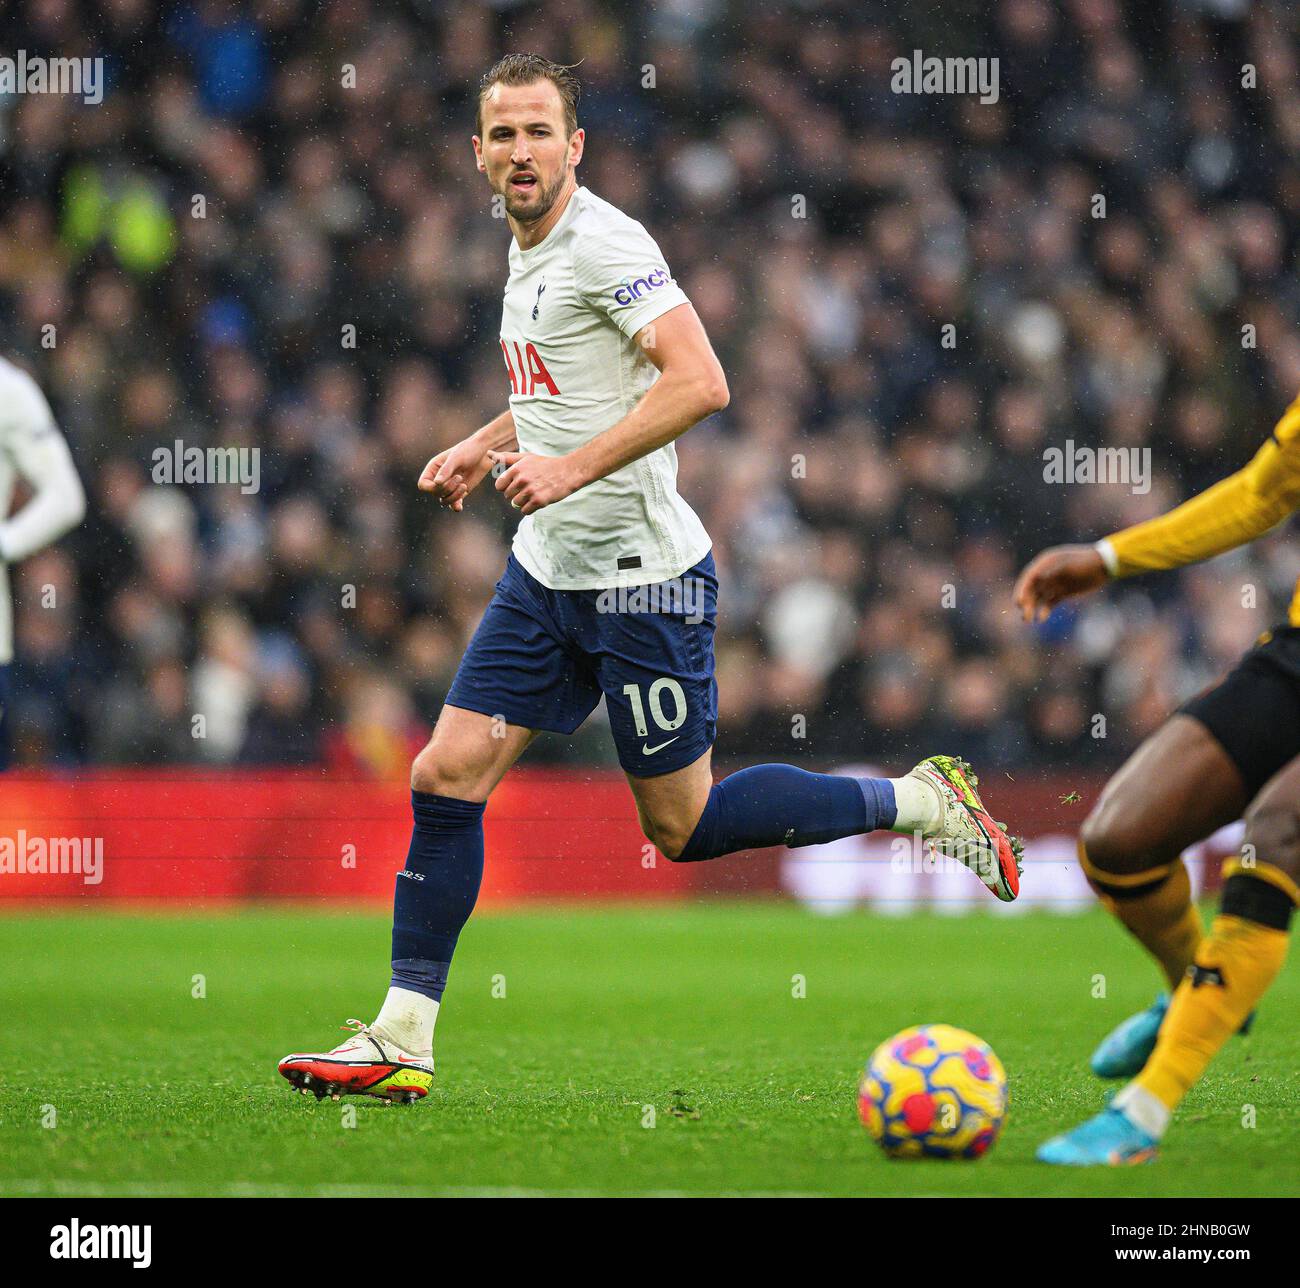 13. Februar 2022 - Tottenham Hotspur gegen Wolverhampton Wanderers - Premier League Harry Kane von Tottenham Hotspur im Spiel gegen Wolves Bildnachweis : © Mark Pain / Alamy Live News Stockfoto